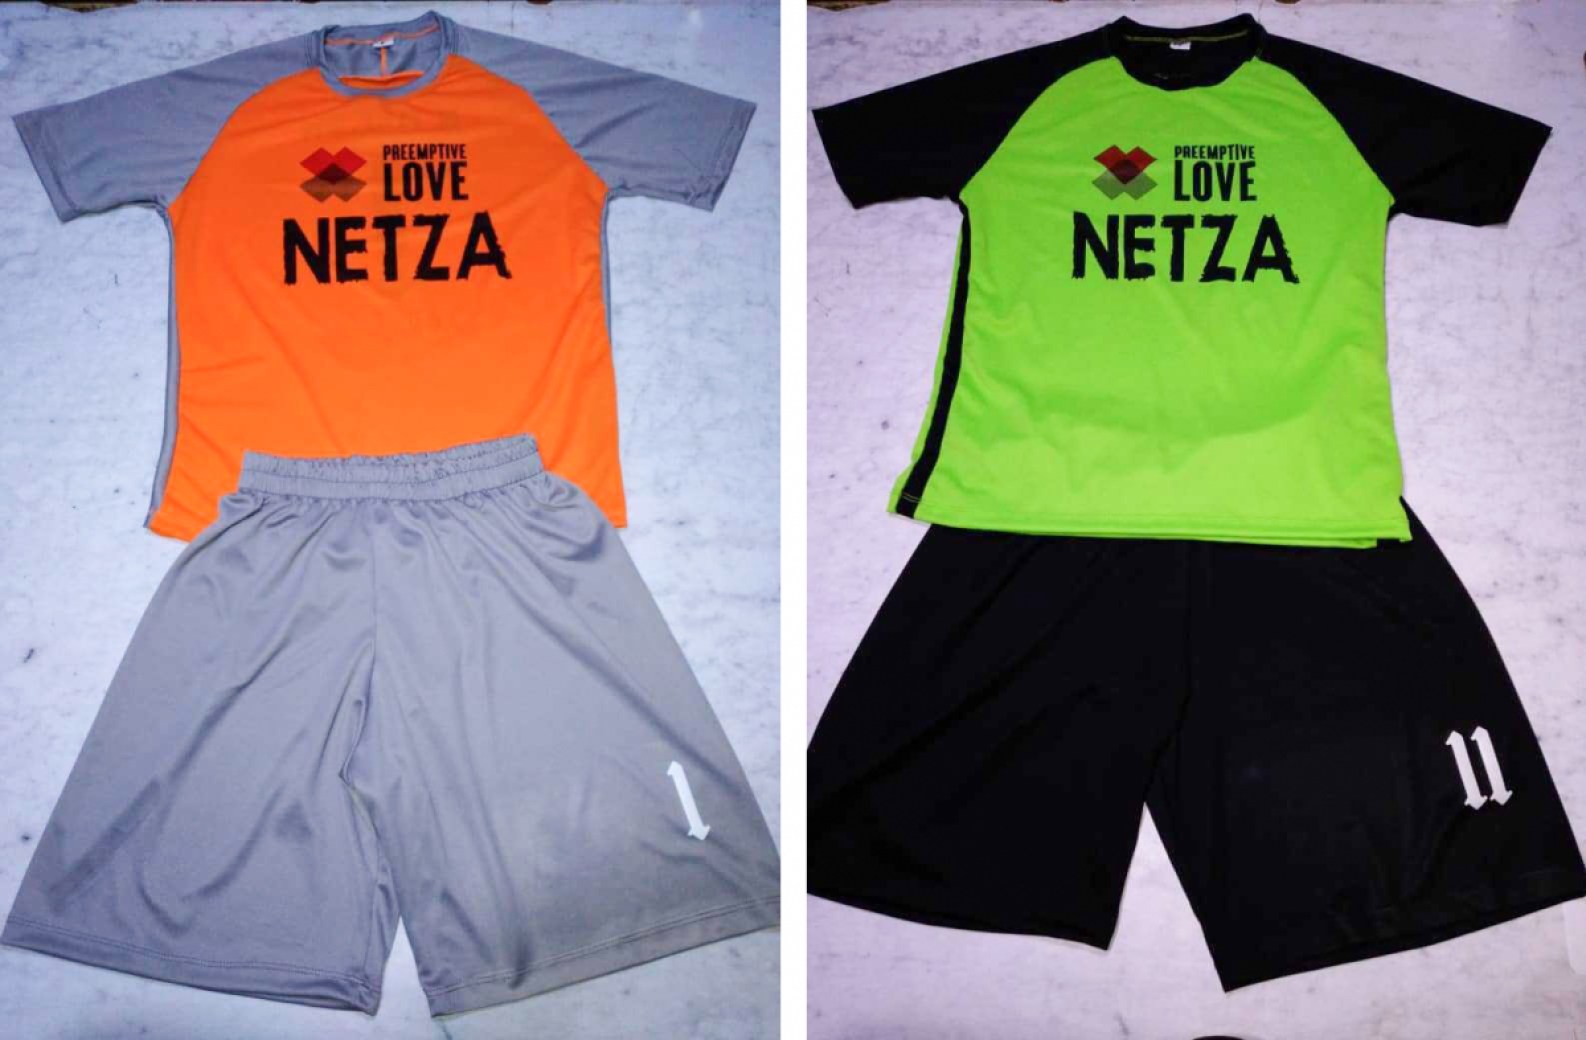 Soccer uniforms in bright orange/grey, and bright green/black.